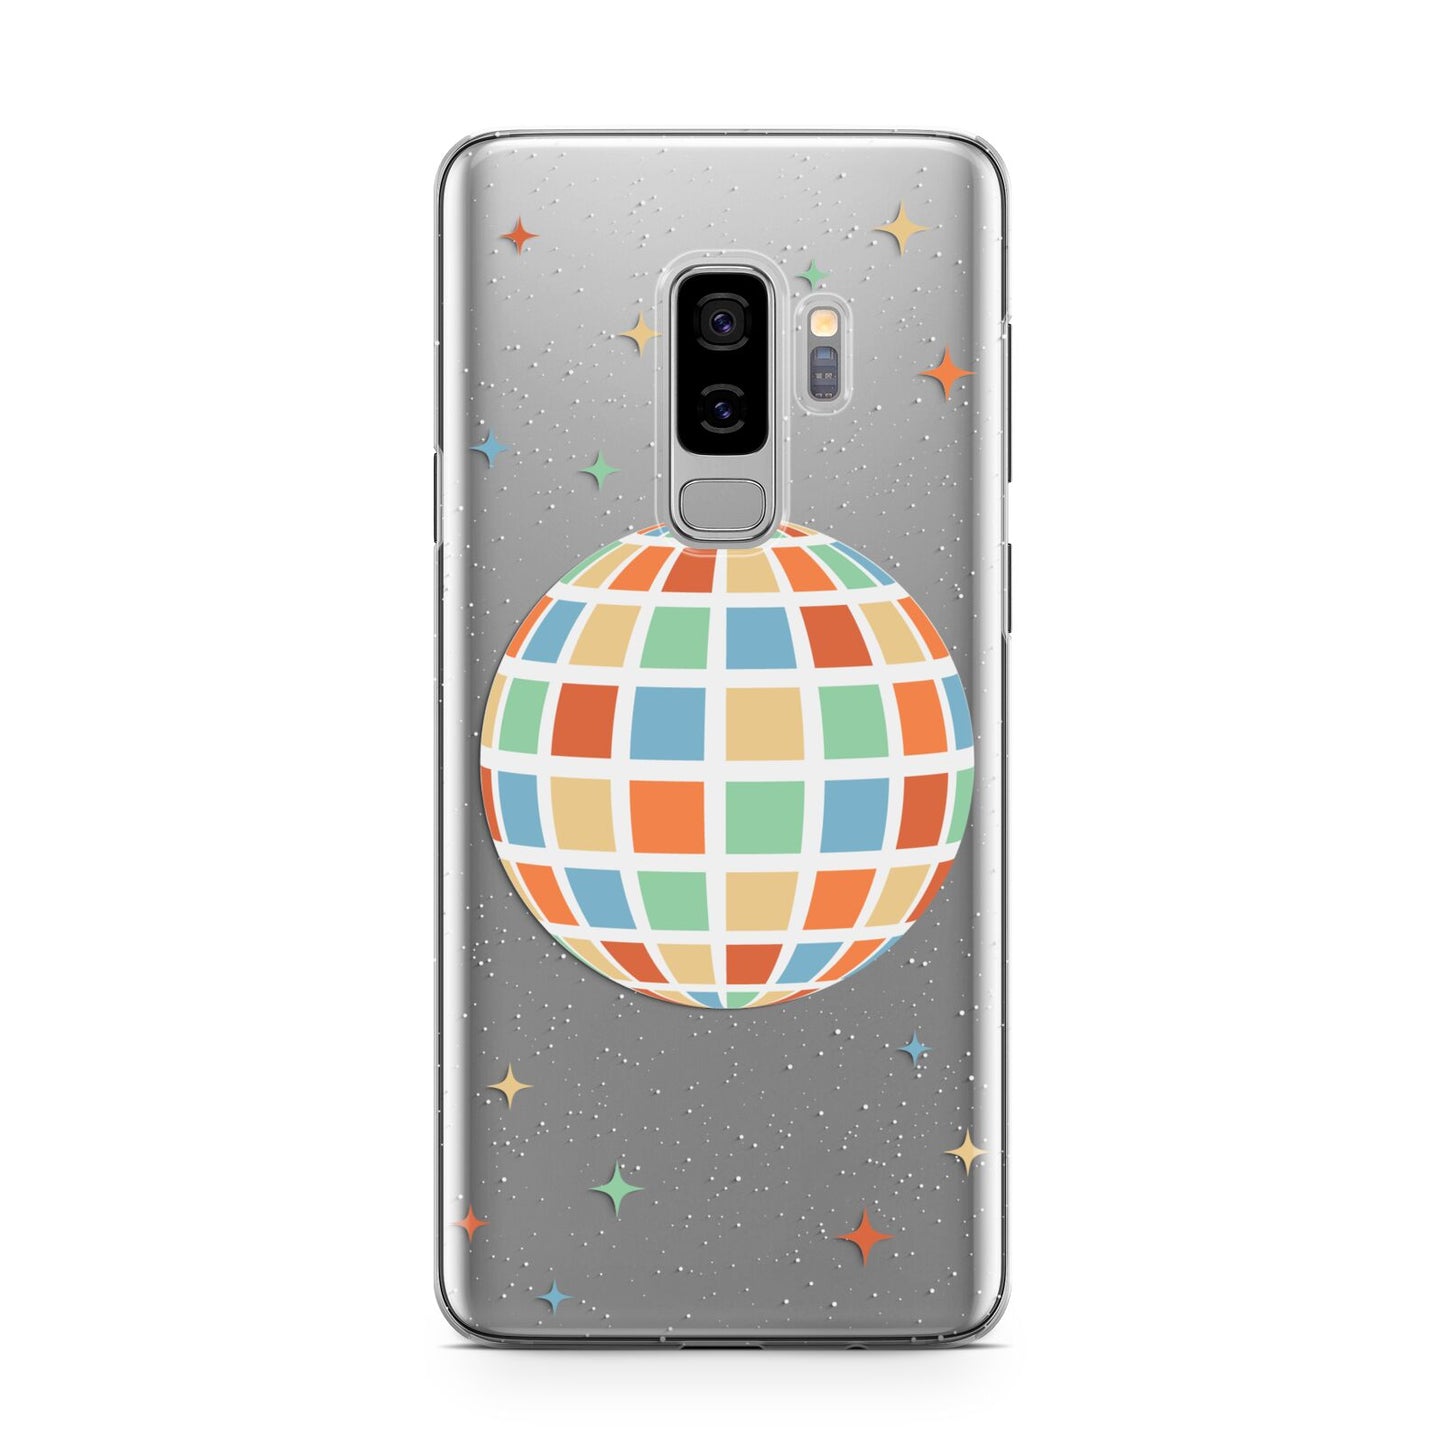 Disco Ball Samsung Galaxy S9 Plus Case on Silver phone